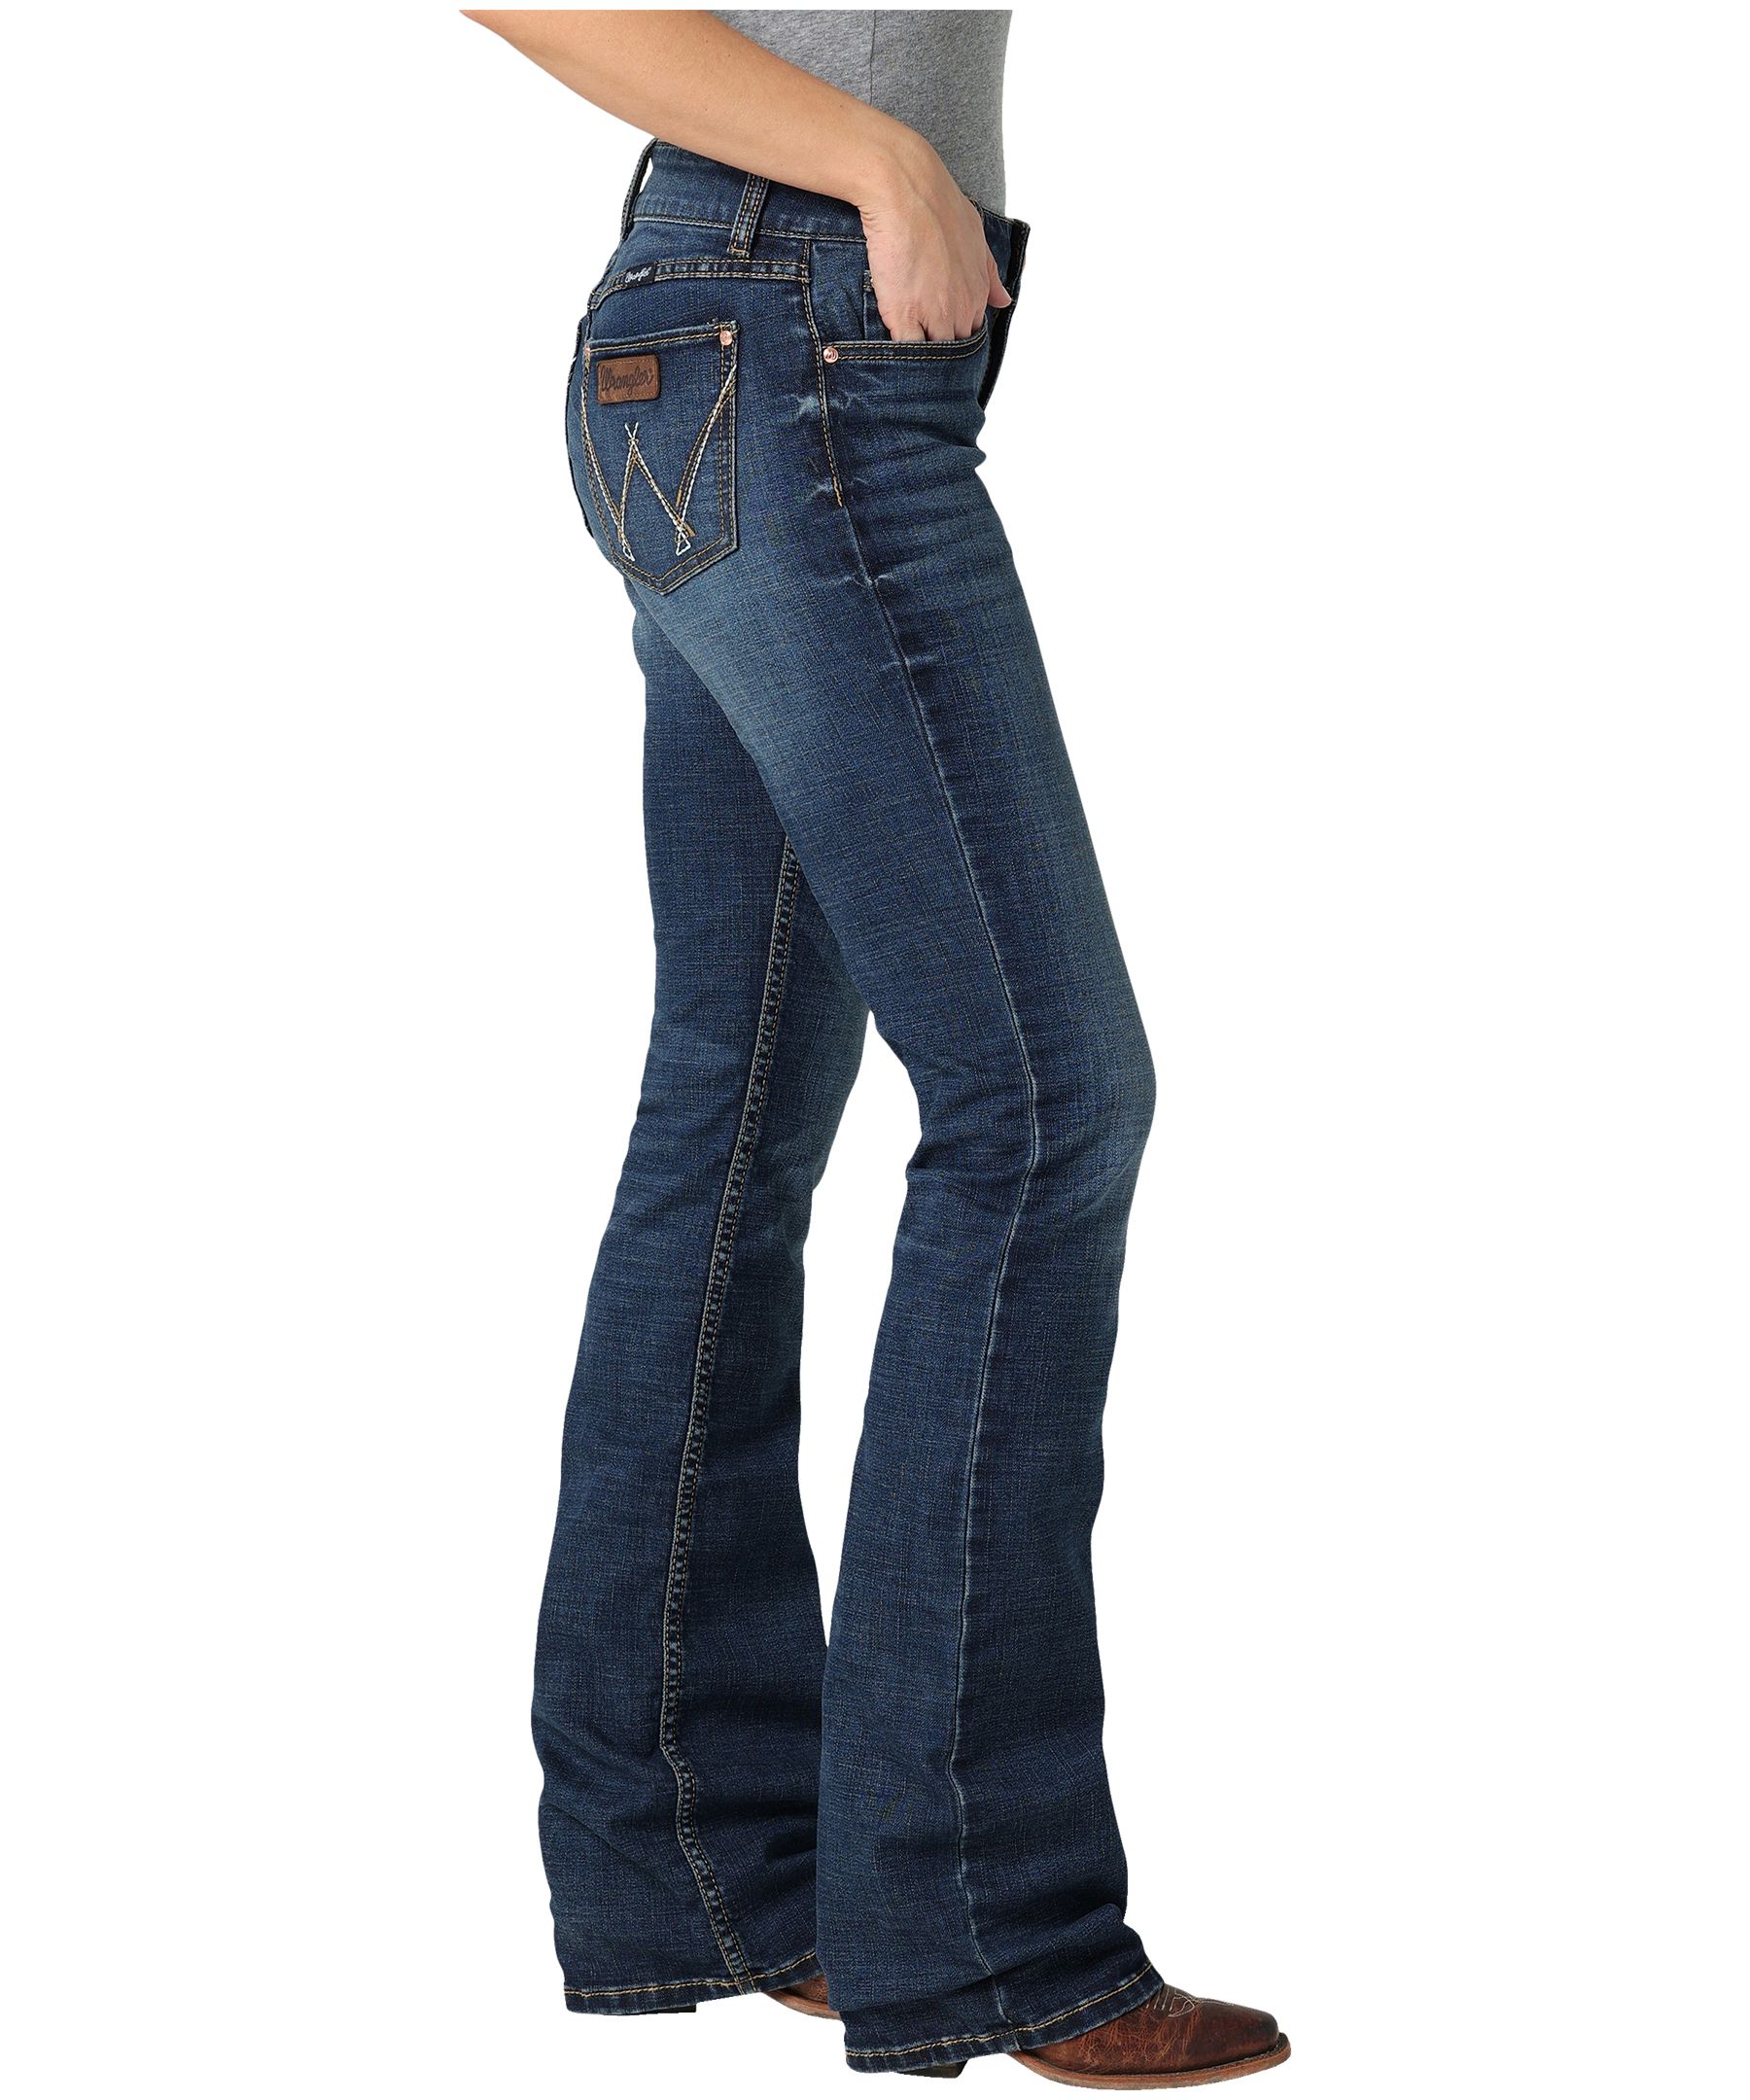 Marne Bootcut Jeans 32 inch - Vintage Indigo